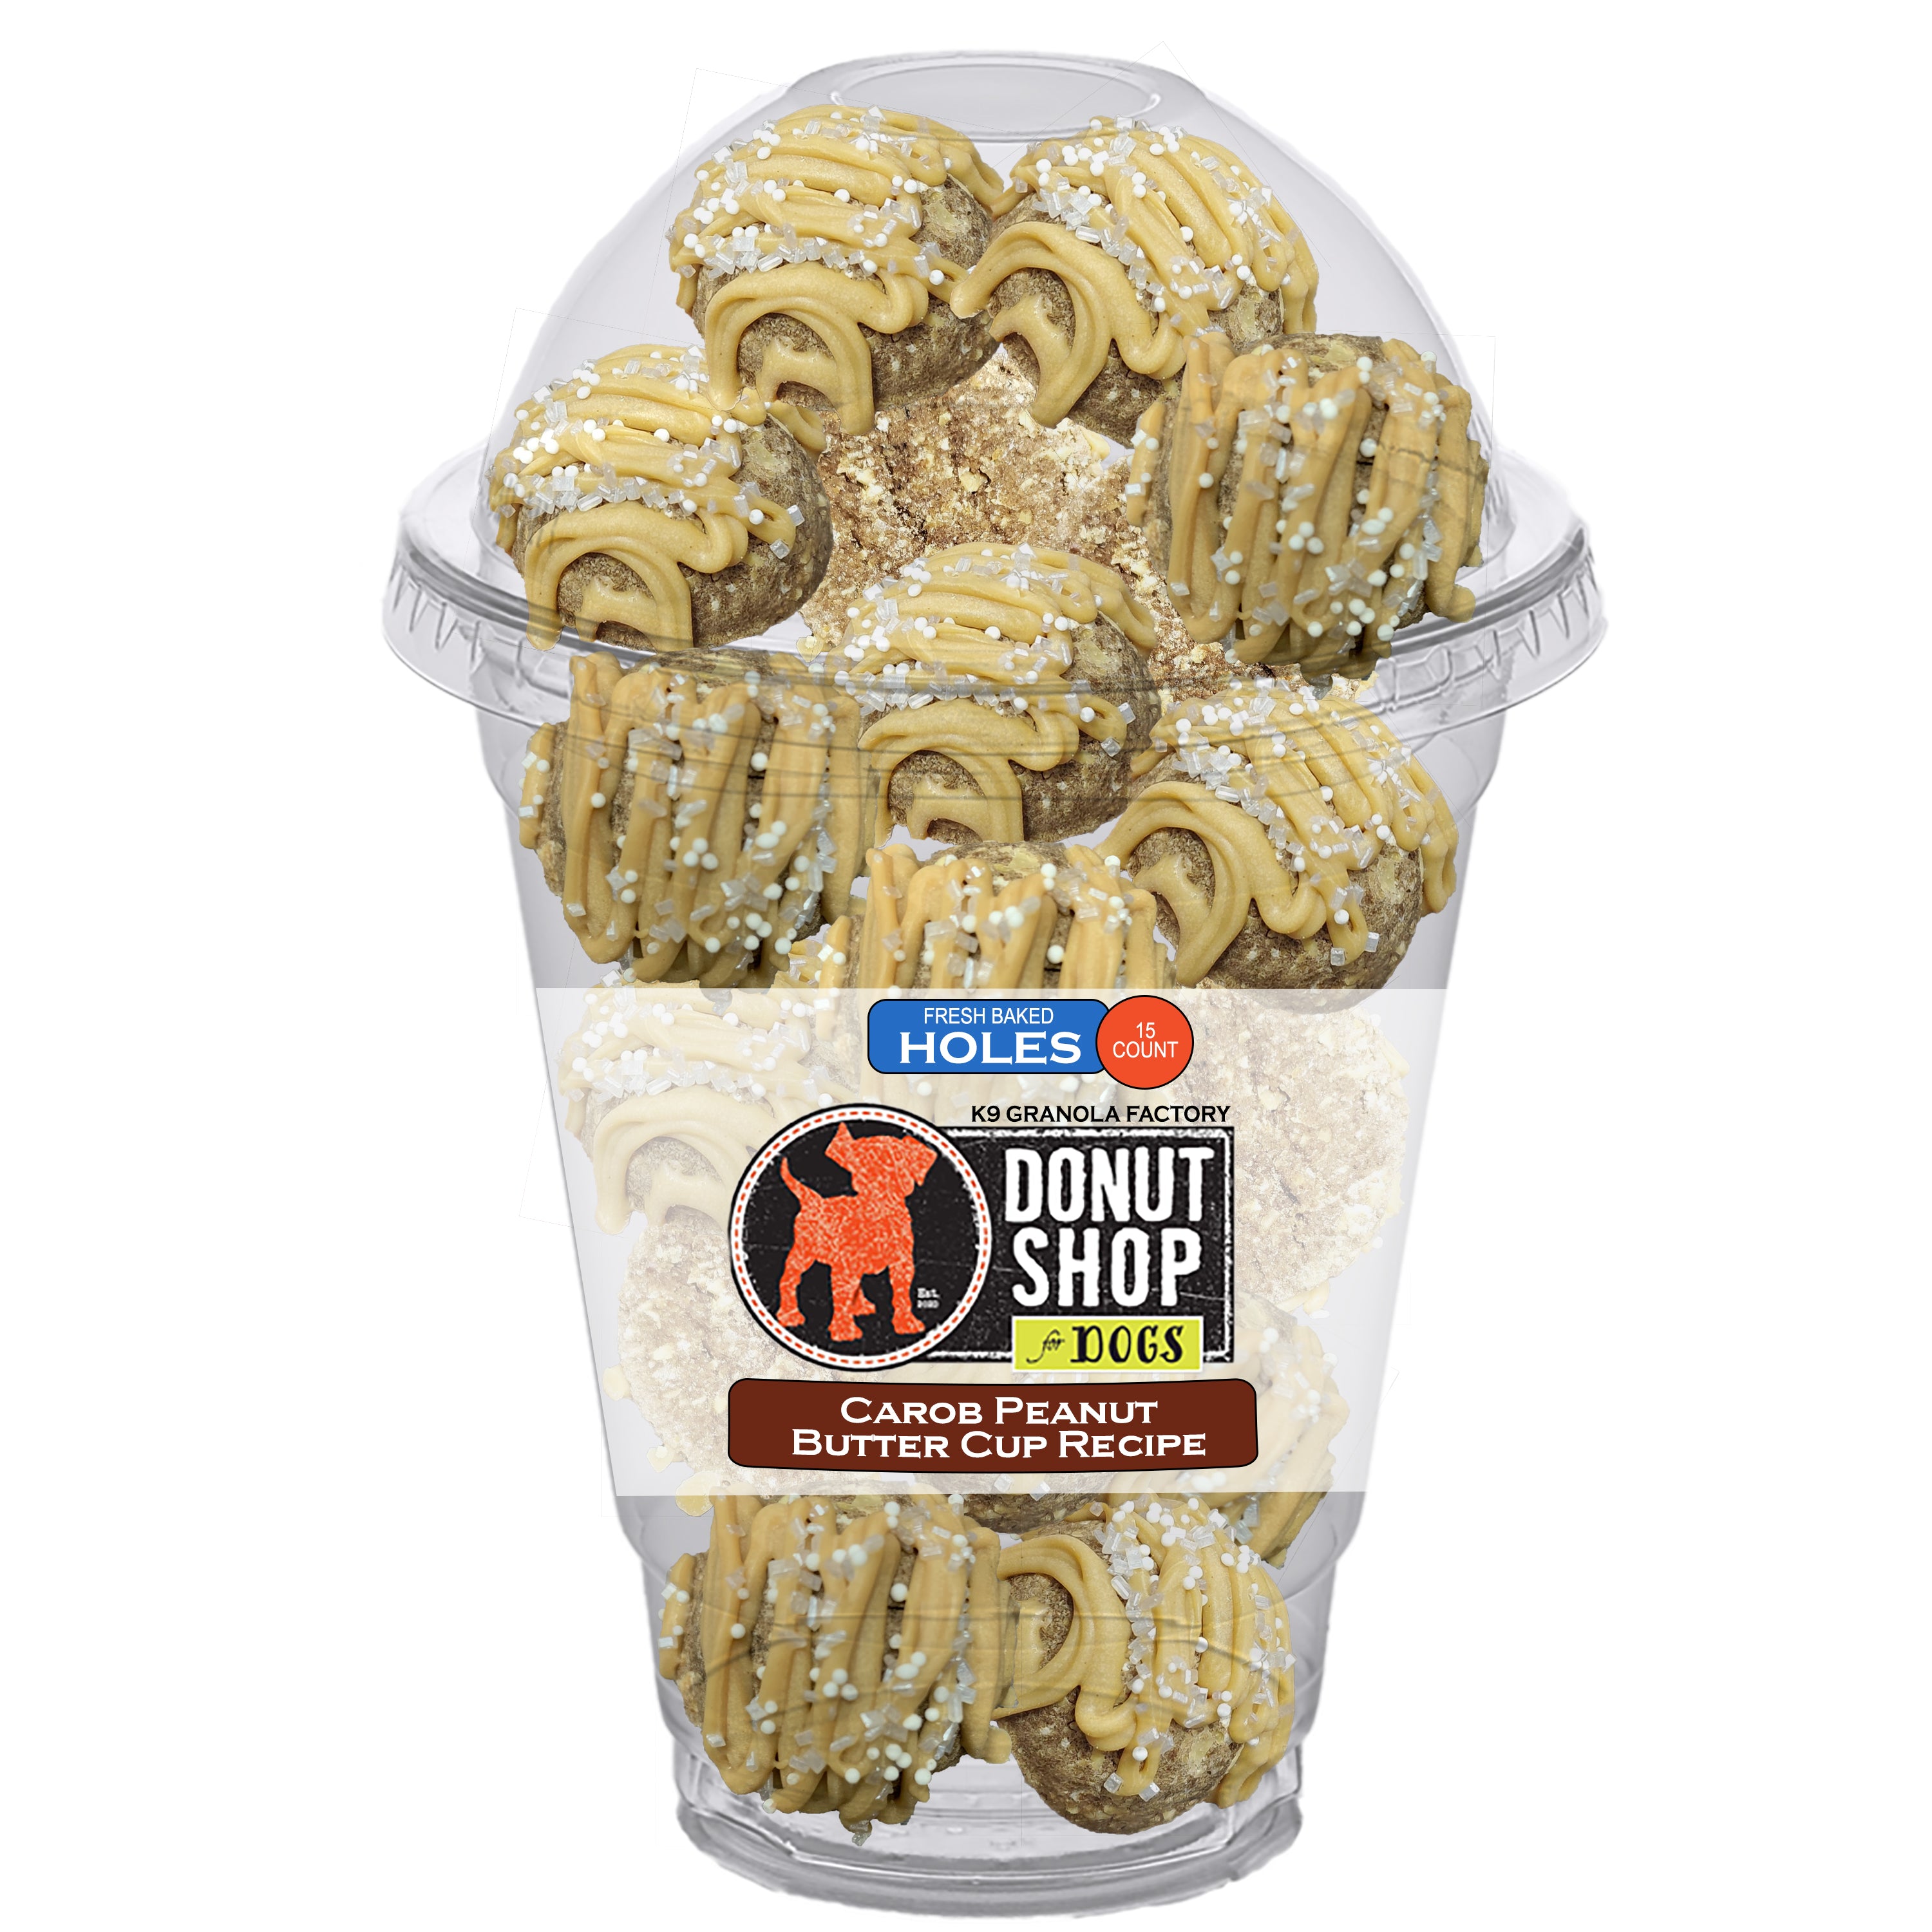 K9 Granola Factory Donut Holes, Carob Peanut Butter Cup Recipe Dog Treats, 15ct